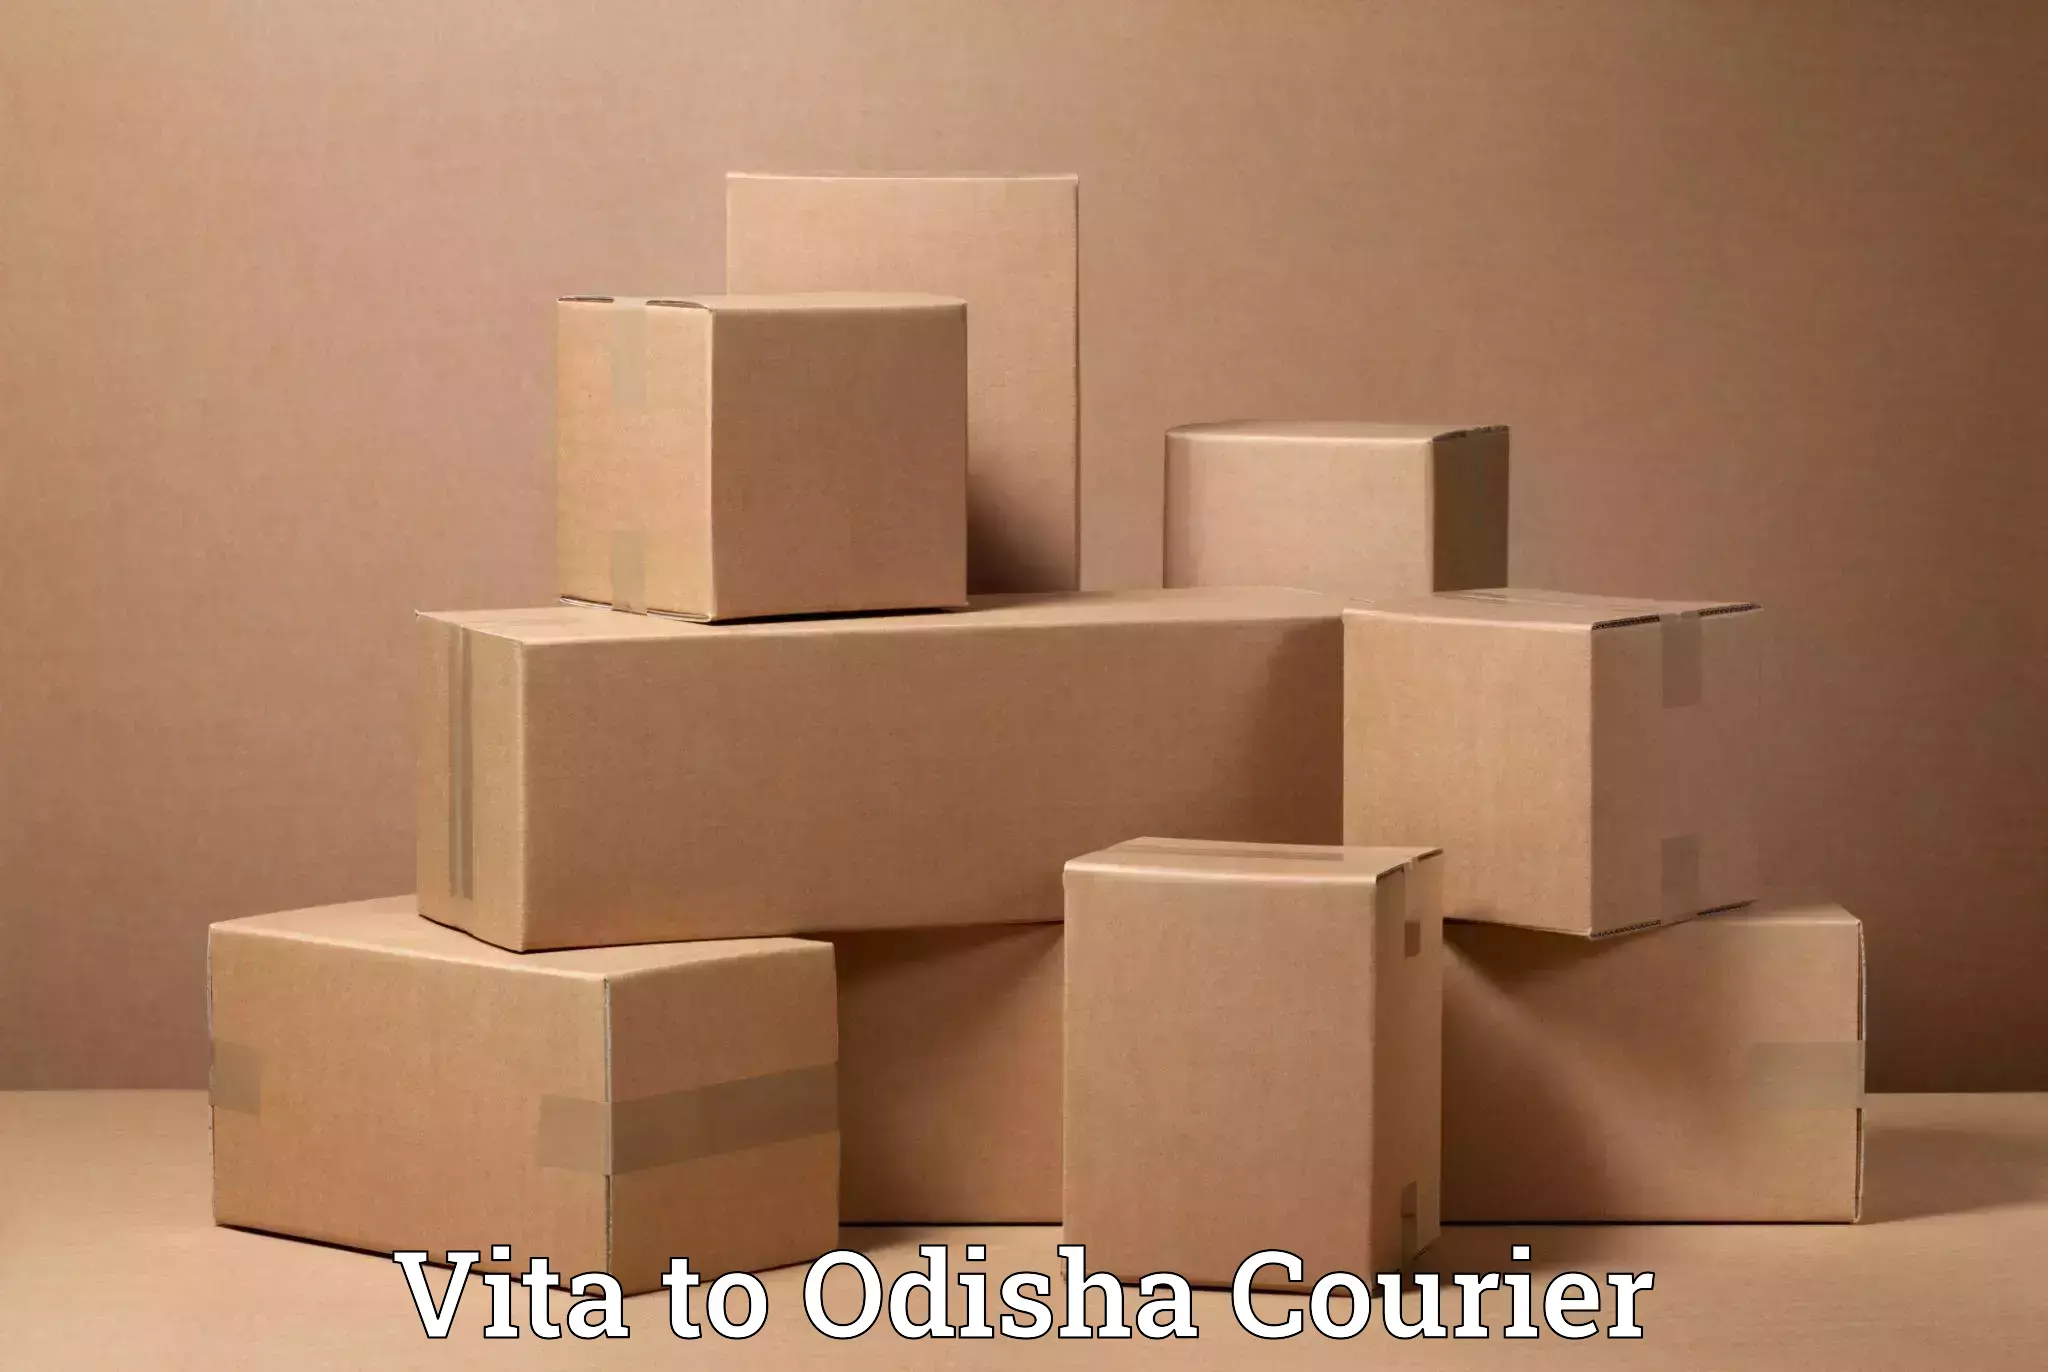 Cost-effective moving options Vita to Odisha